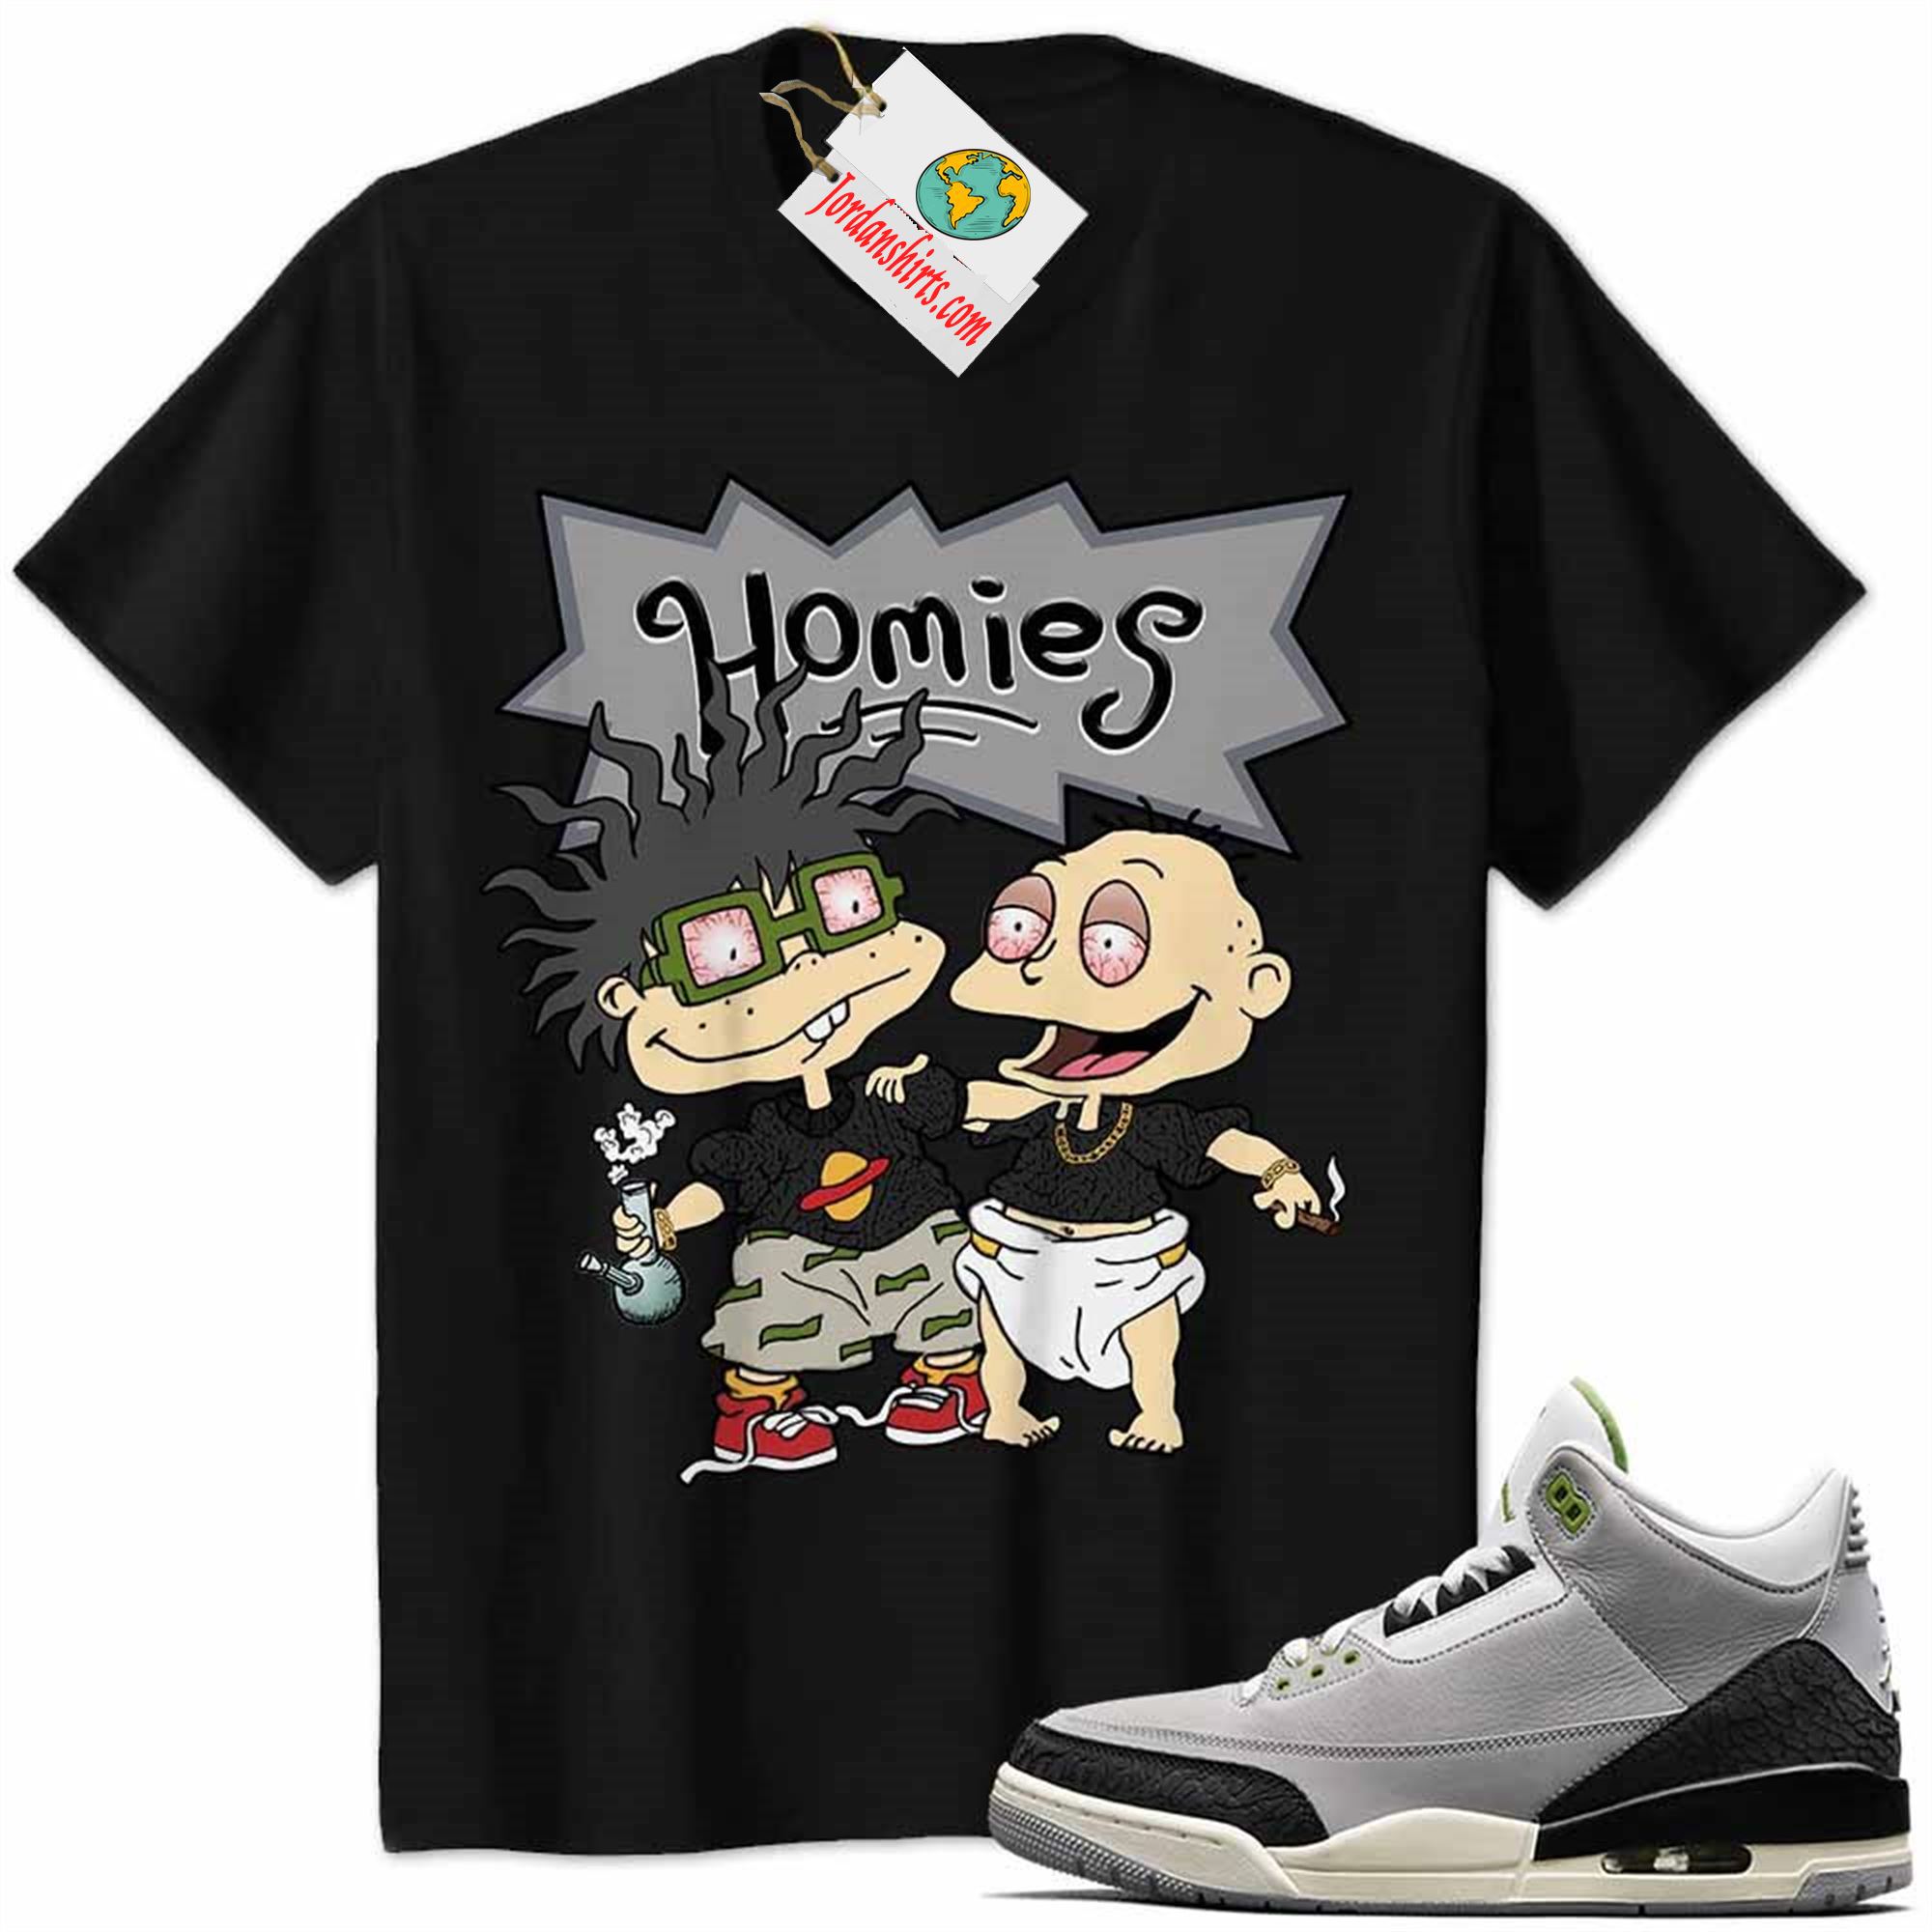 Jordan 3 Shirt, Jordan 3 Chlorophyll Shirt Hommies Tommy Pickles Chuckie Finster Rugrats Black Size Up To 5xl